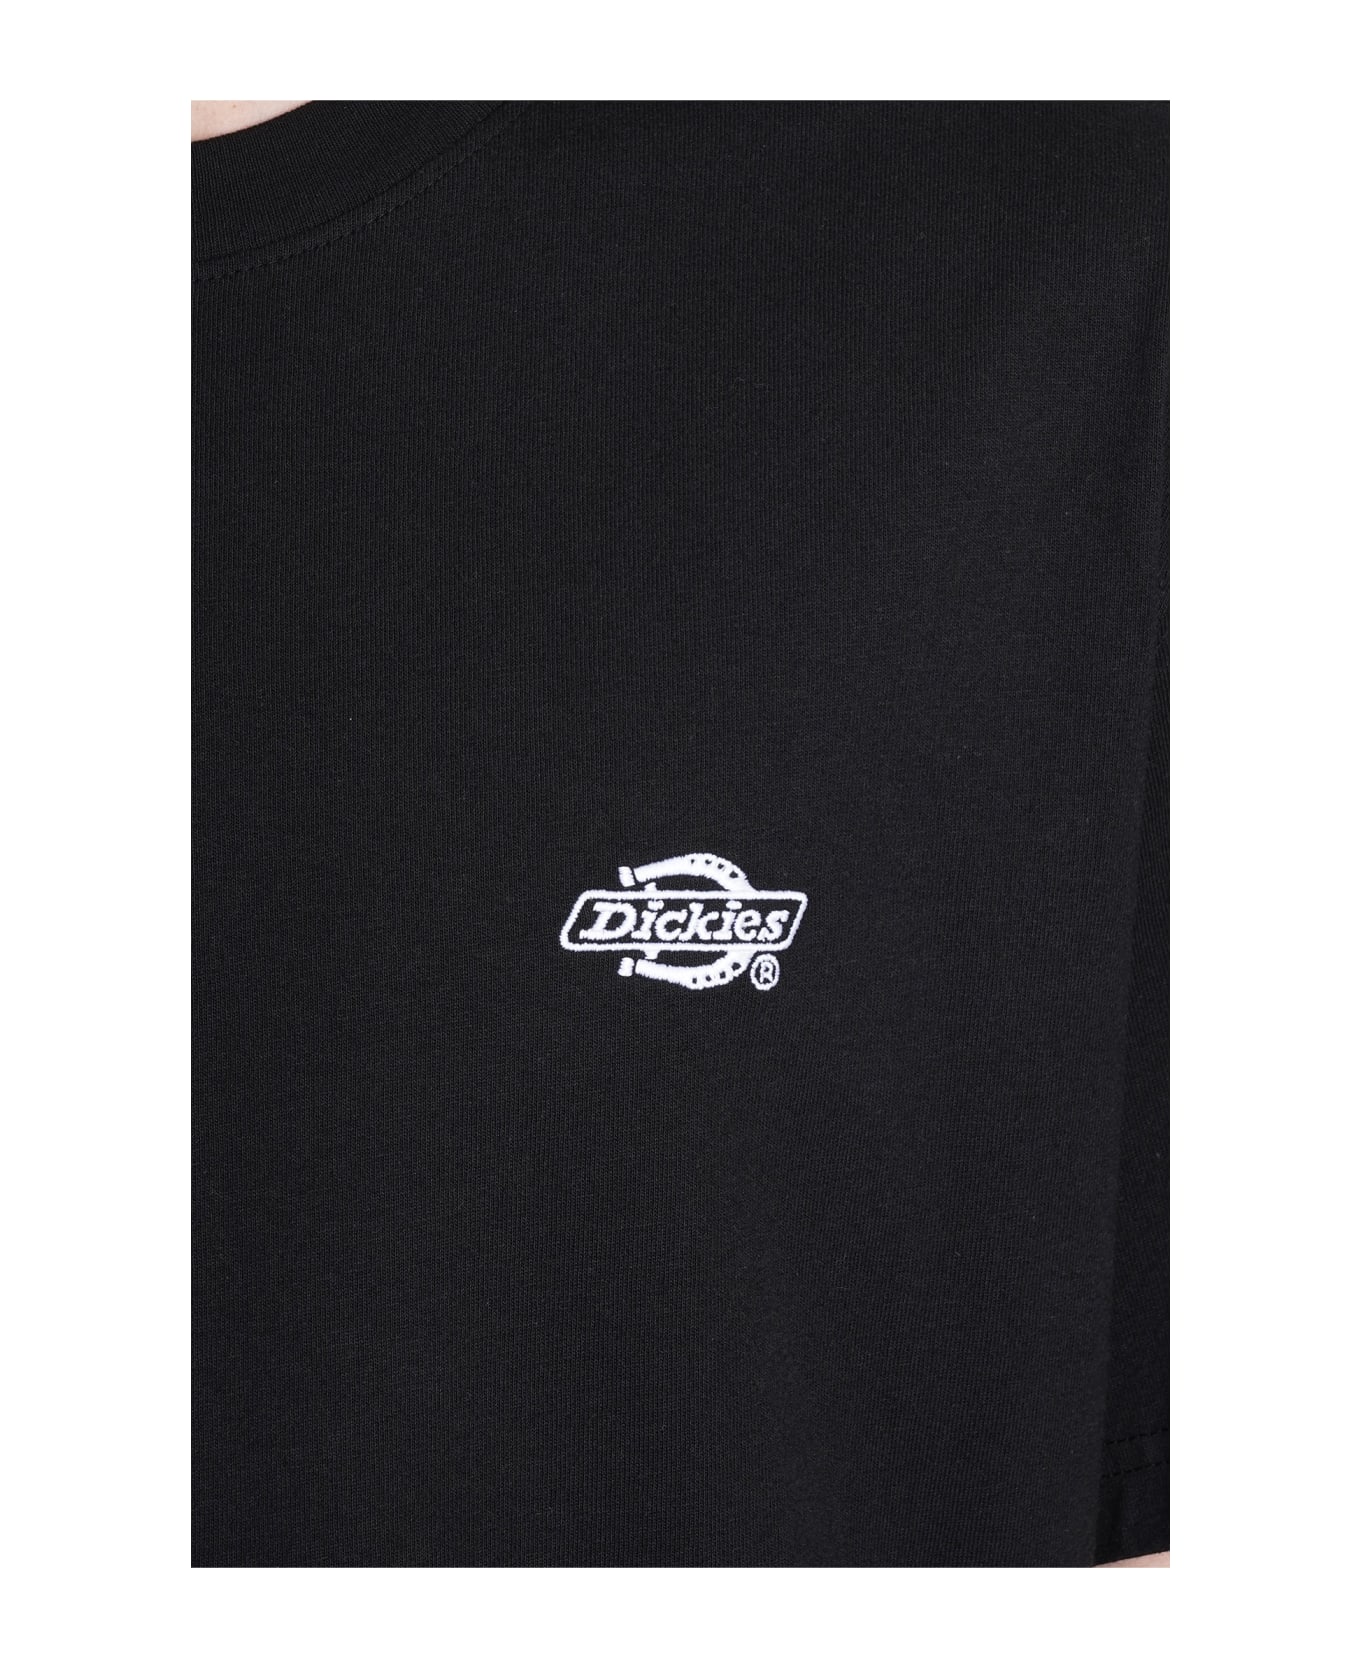 Dickies T-shirt In Black Cotton - Black